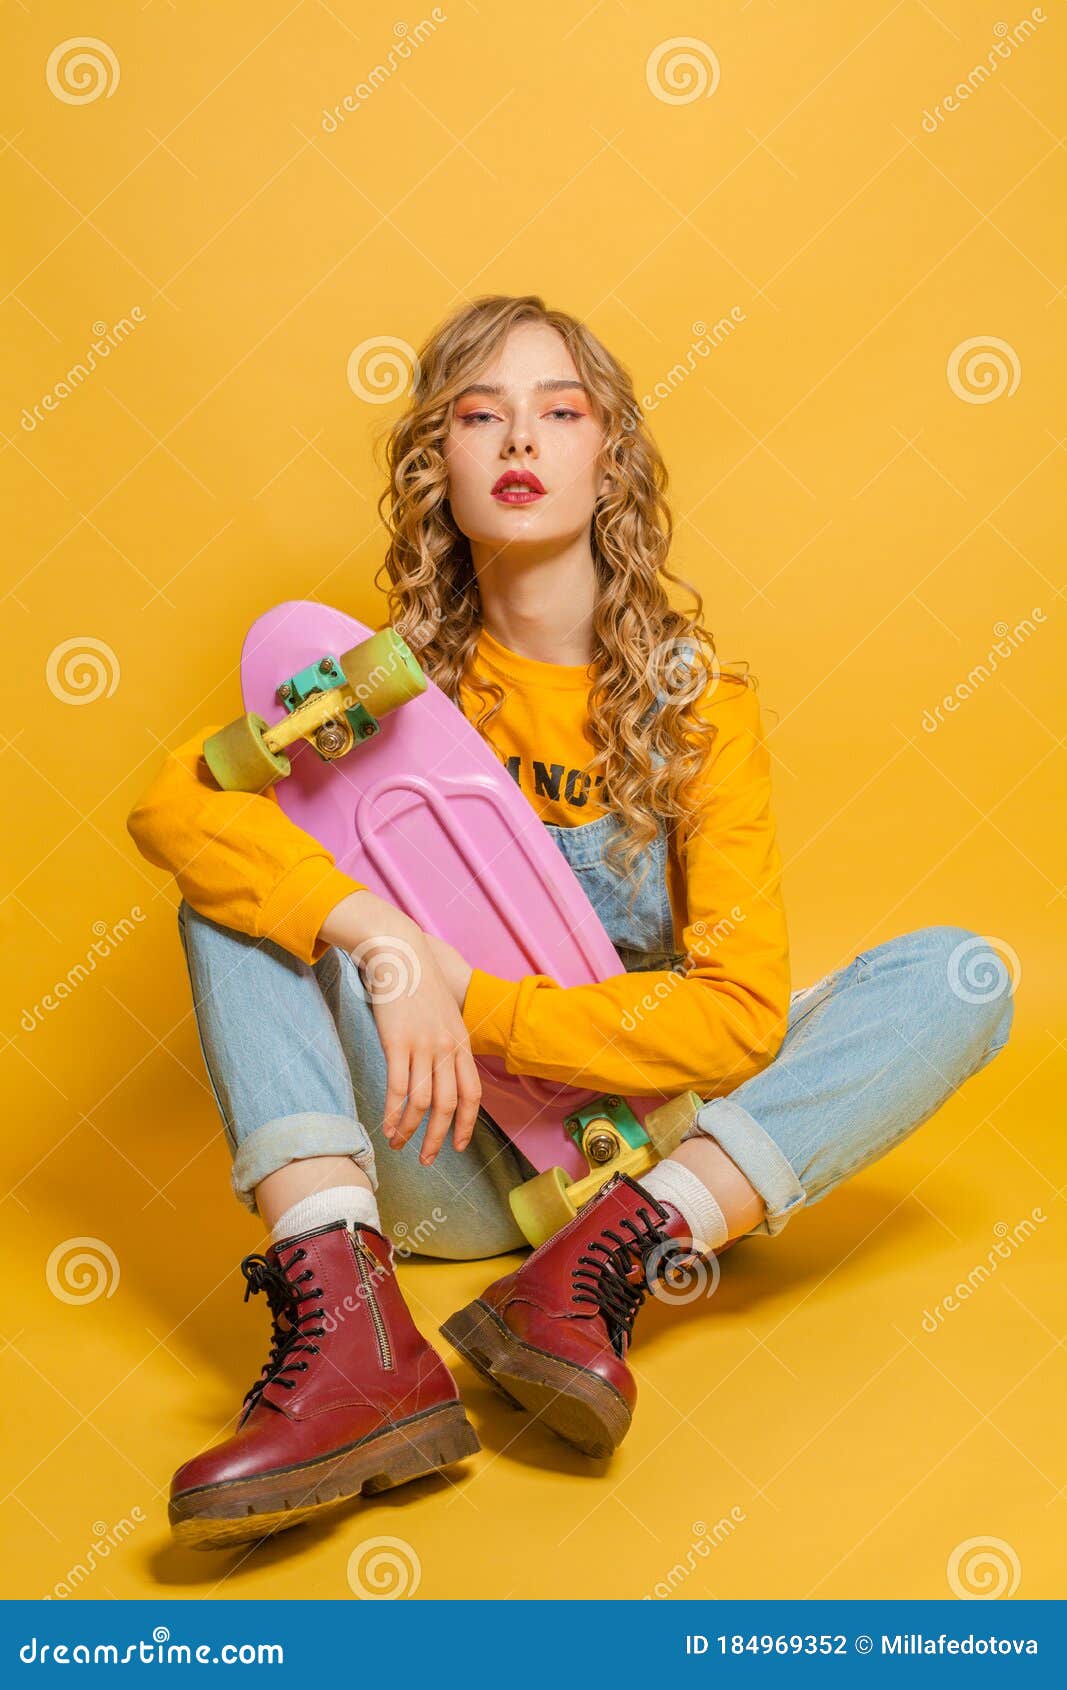 Fashion Woman Sitting on Skateboard on Bright Yellow Background Stock ...